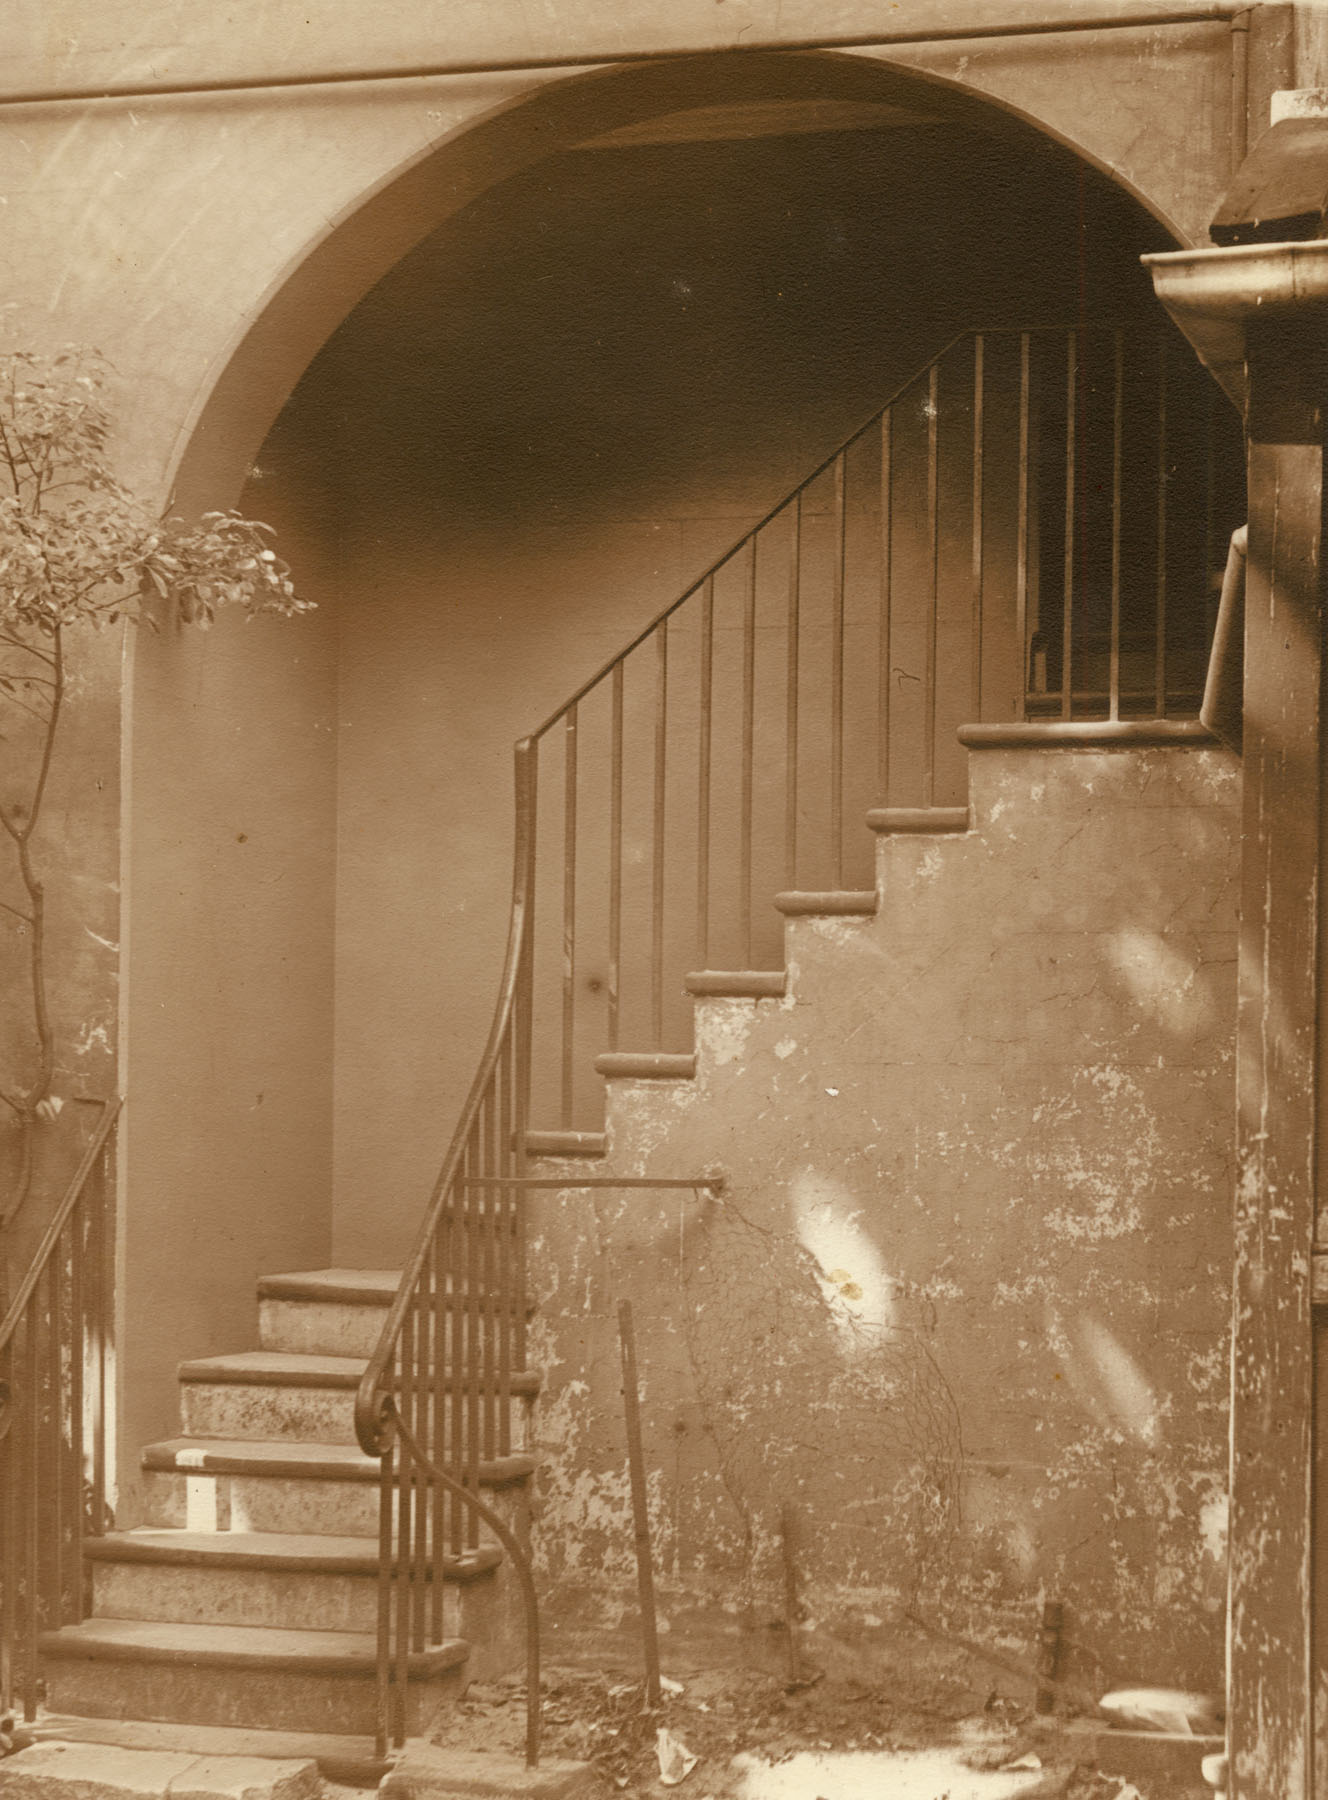 Stairway "The Old Mint" [Macquarie Street Sydney], ca.1935 / Thomas J. Lawlor